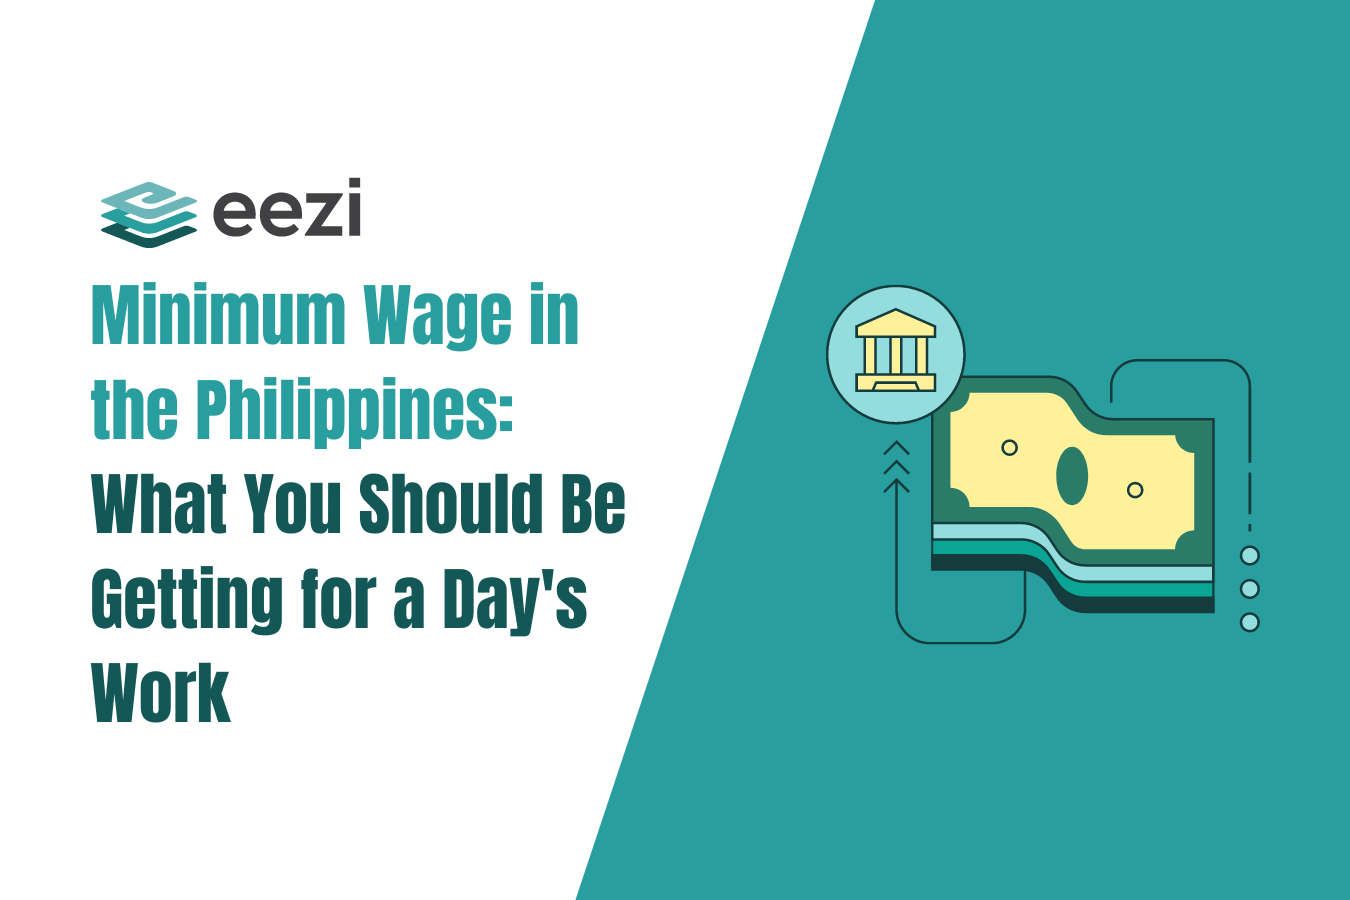 Minimum wage in the Philippines